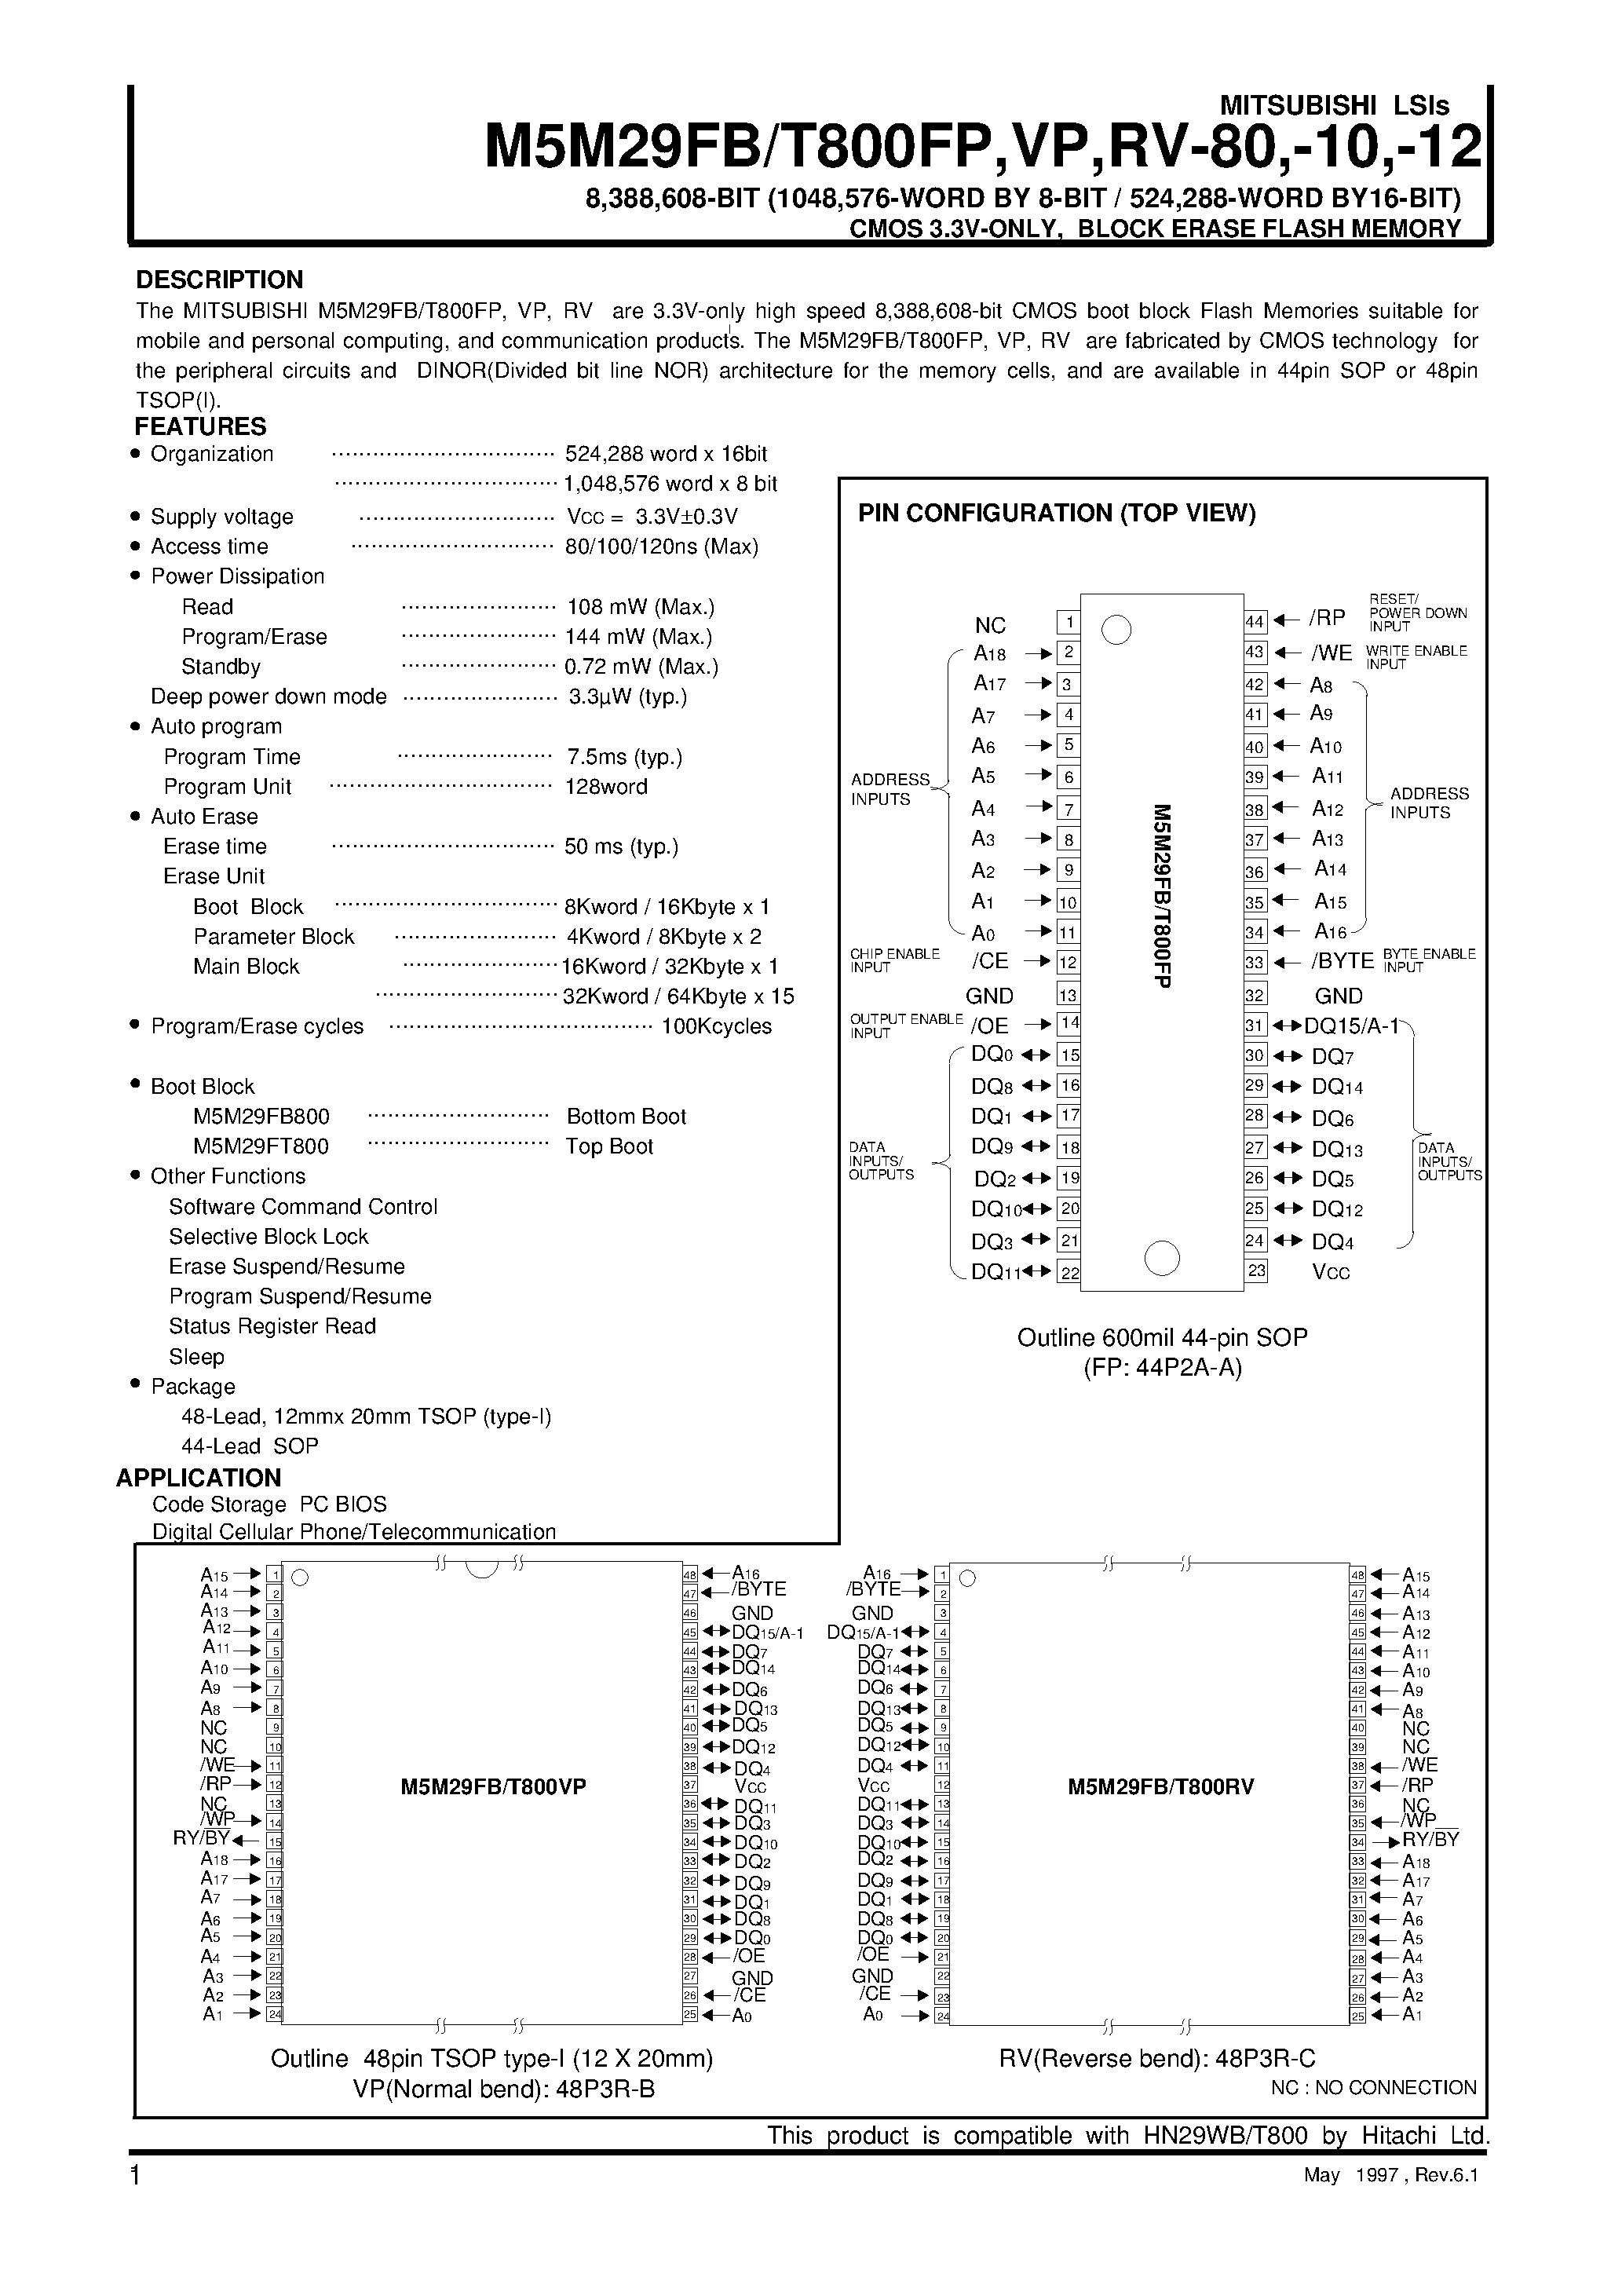 Datasheet M5M29FT800RV-12 - 8 /388 /608-BIT (1048 /576-576-WORD BY 8-BIT / 524 /288-WORD BY16-BIT)CMOS 3.3V-ONLY / BLOCK ERASE FLASH MEMORY page 1